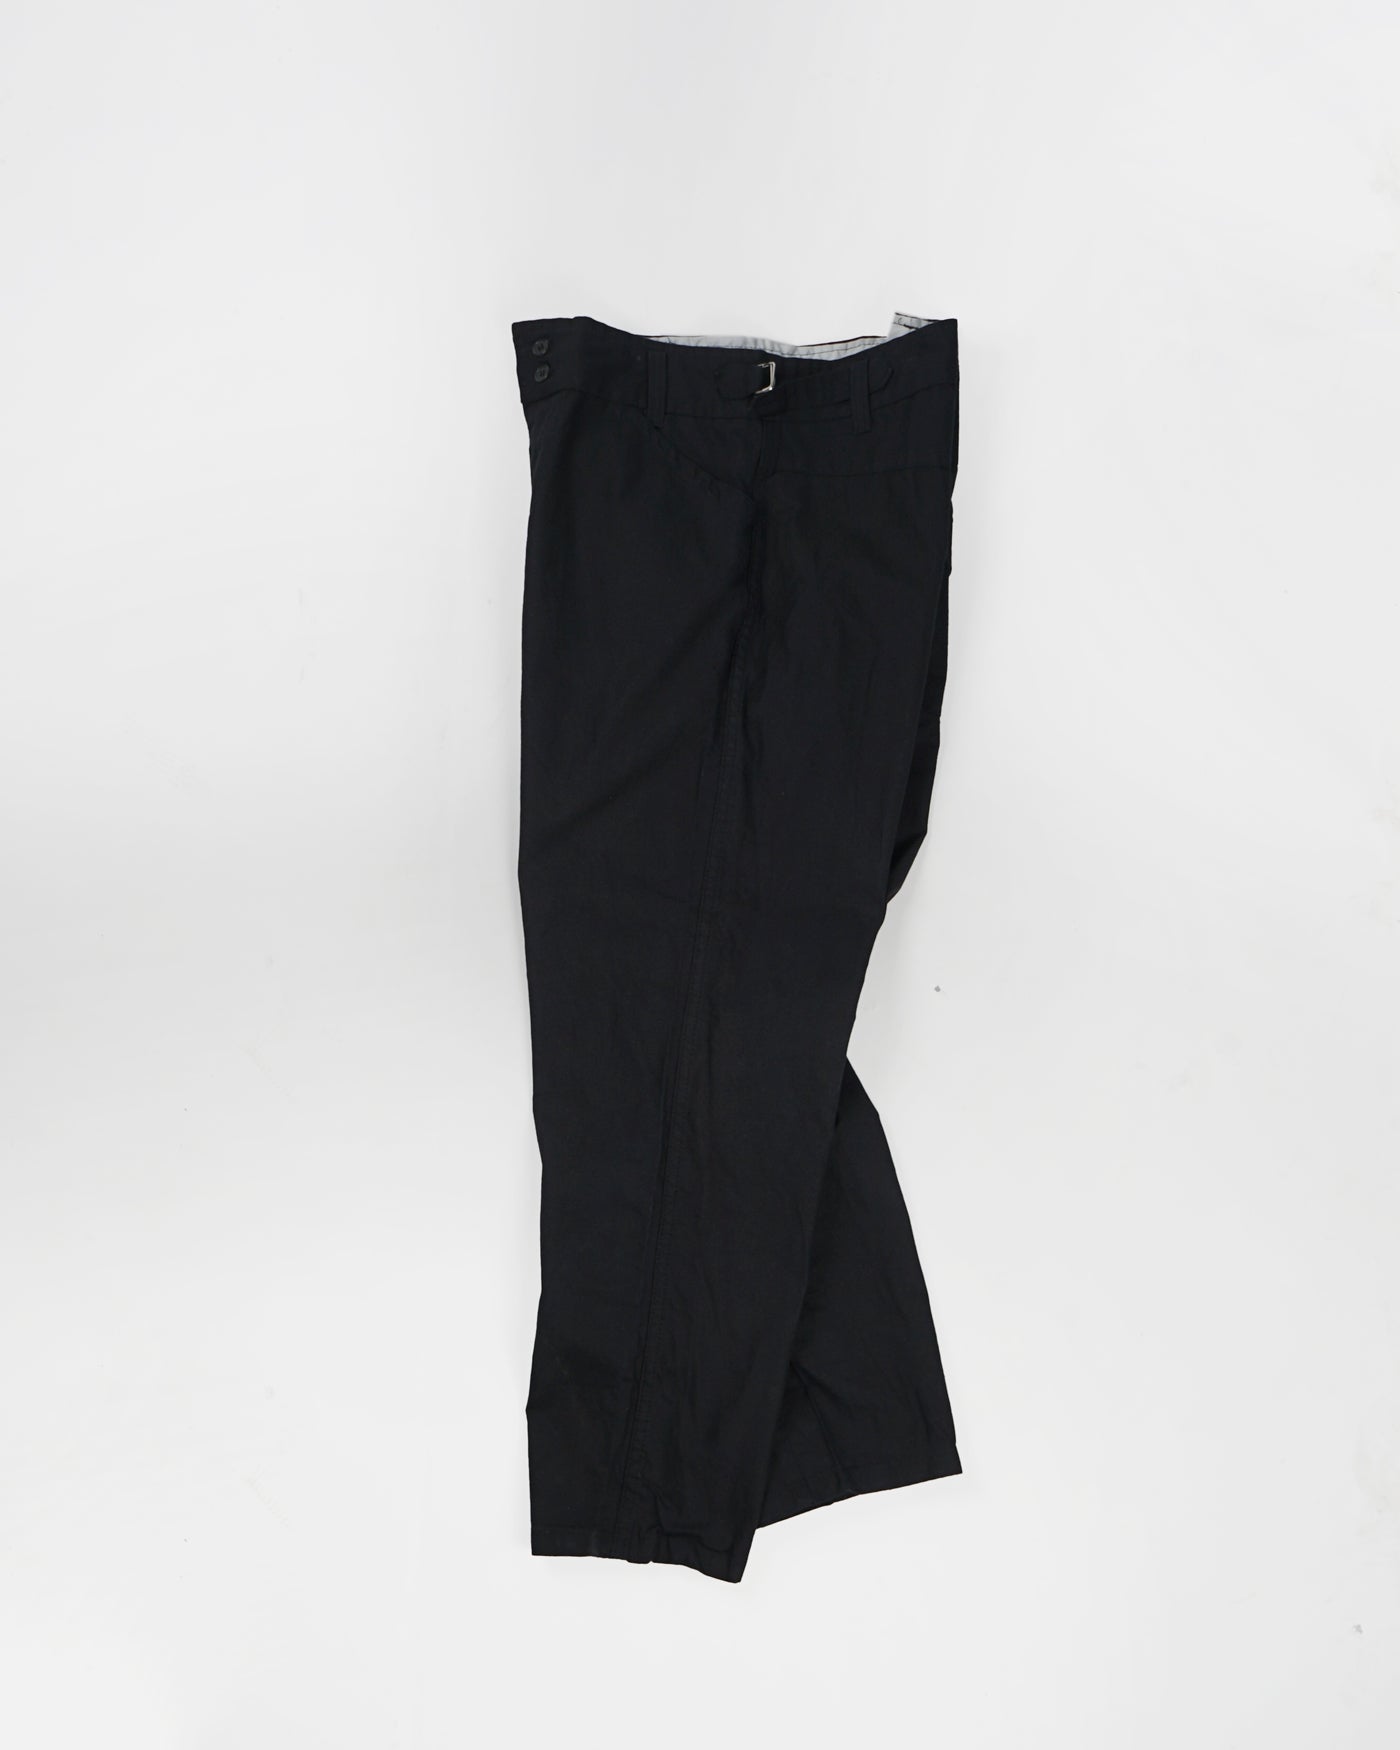 [NEW] Uniqlo Black Work Pants